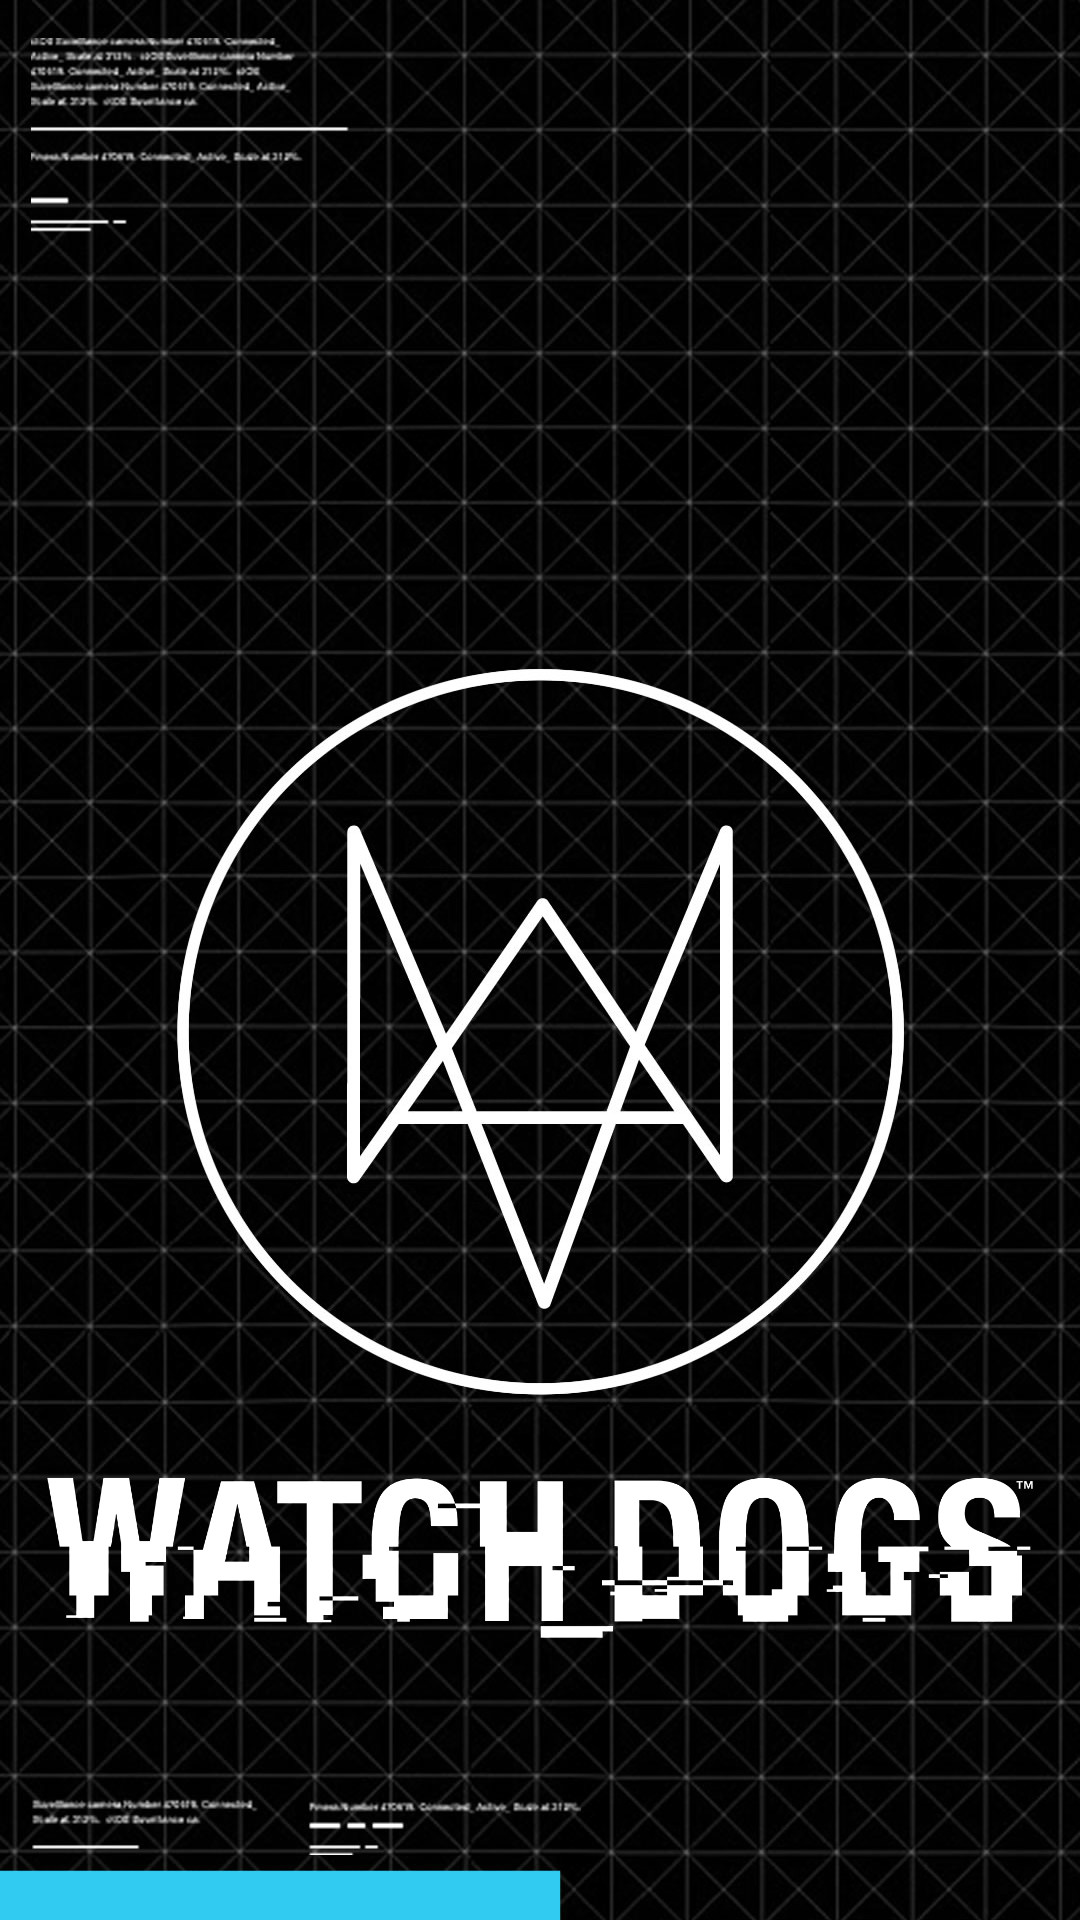 watch dogs logo wallpaper,font,logo,text,graphics,brand